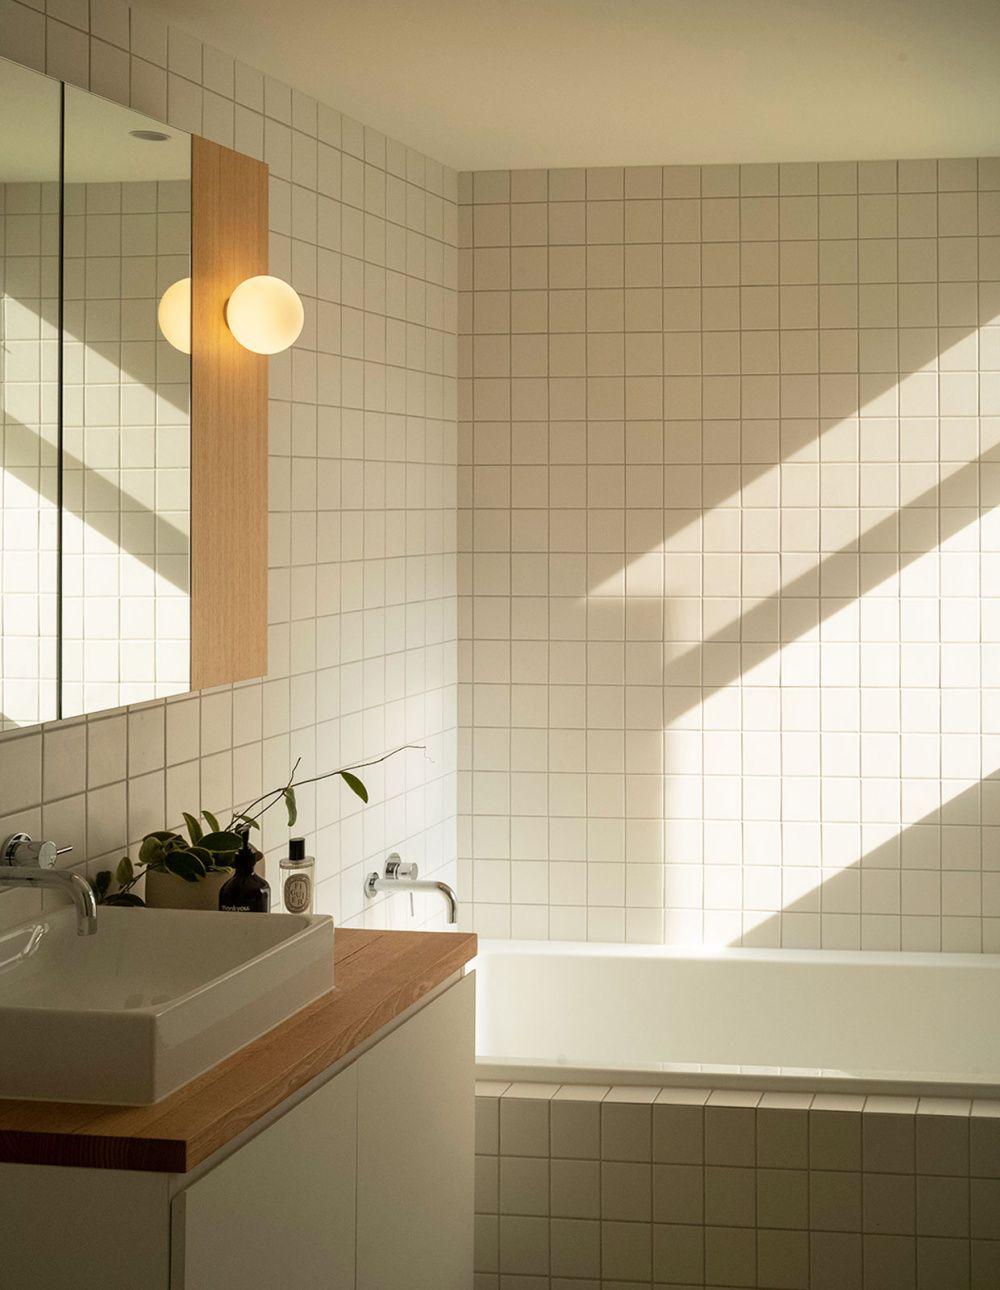 Bathroom wall lights – how to choose